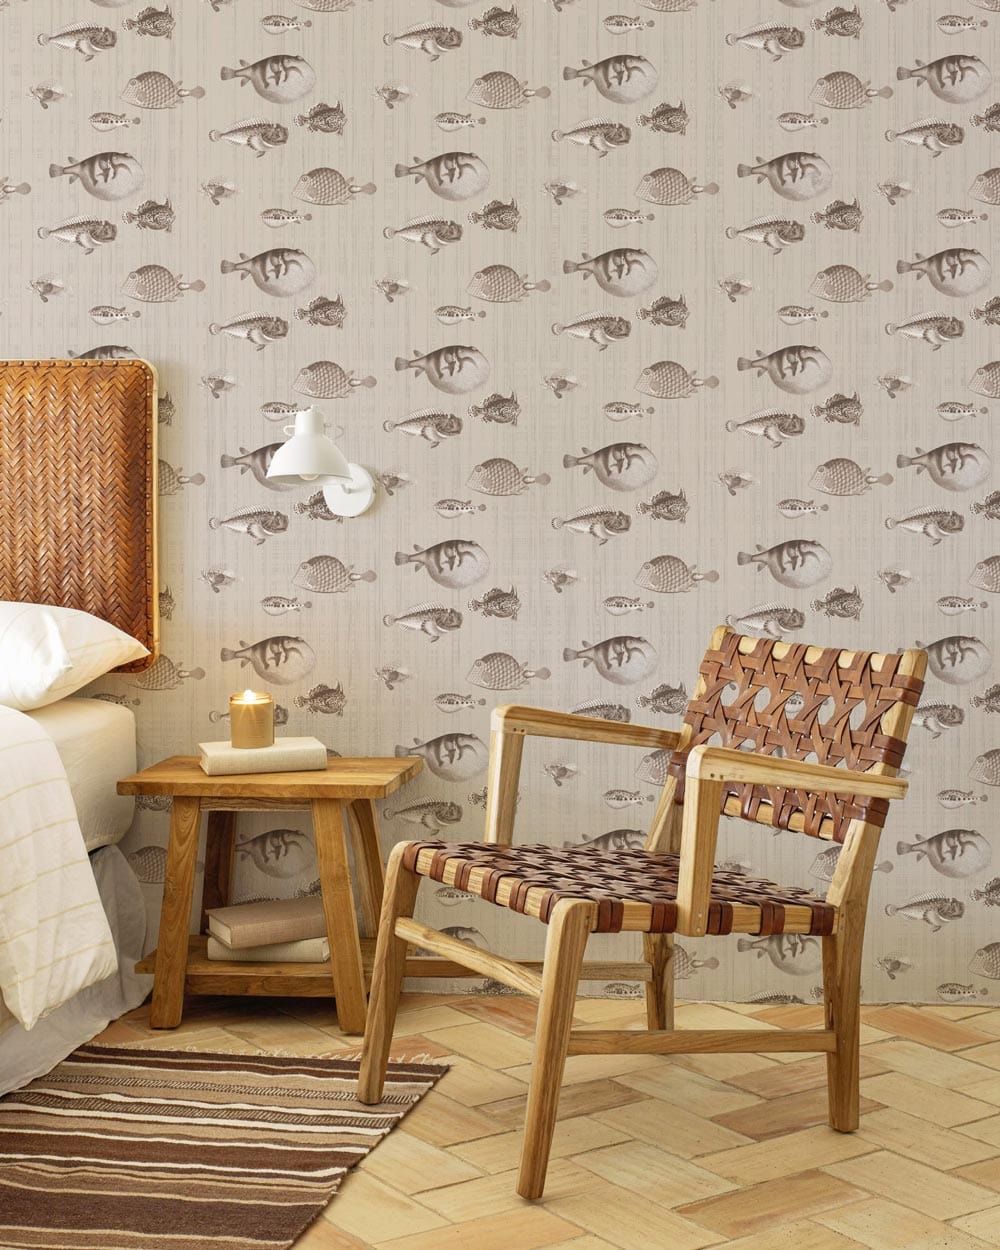 neutral fishes pattern wallpaper design